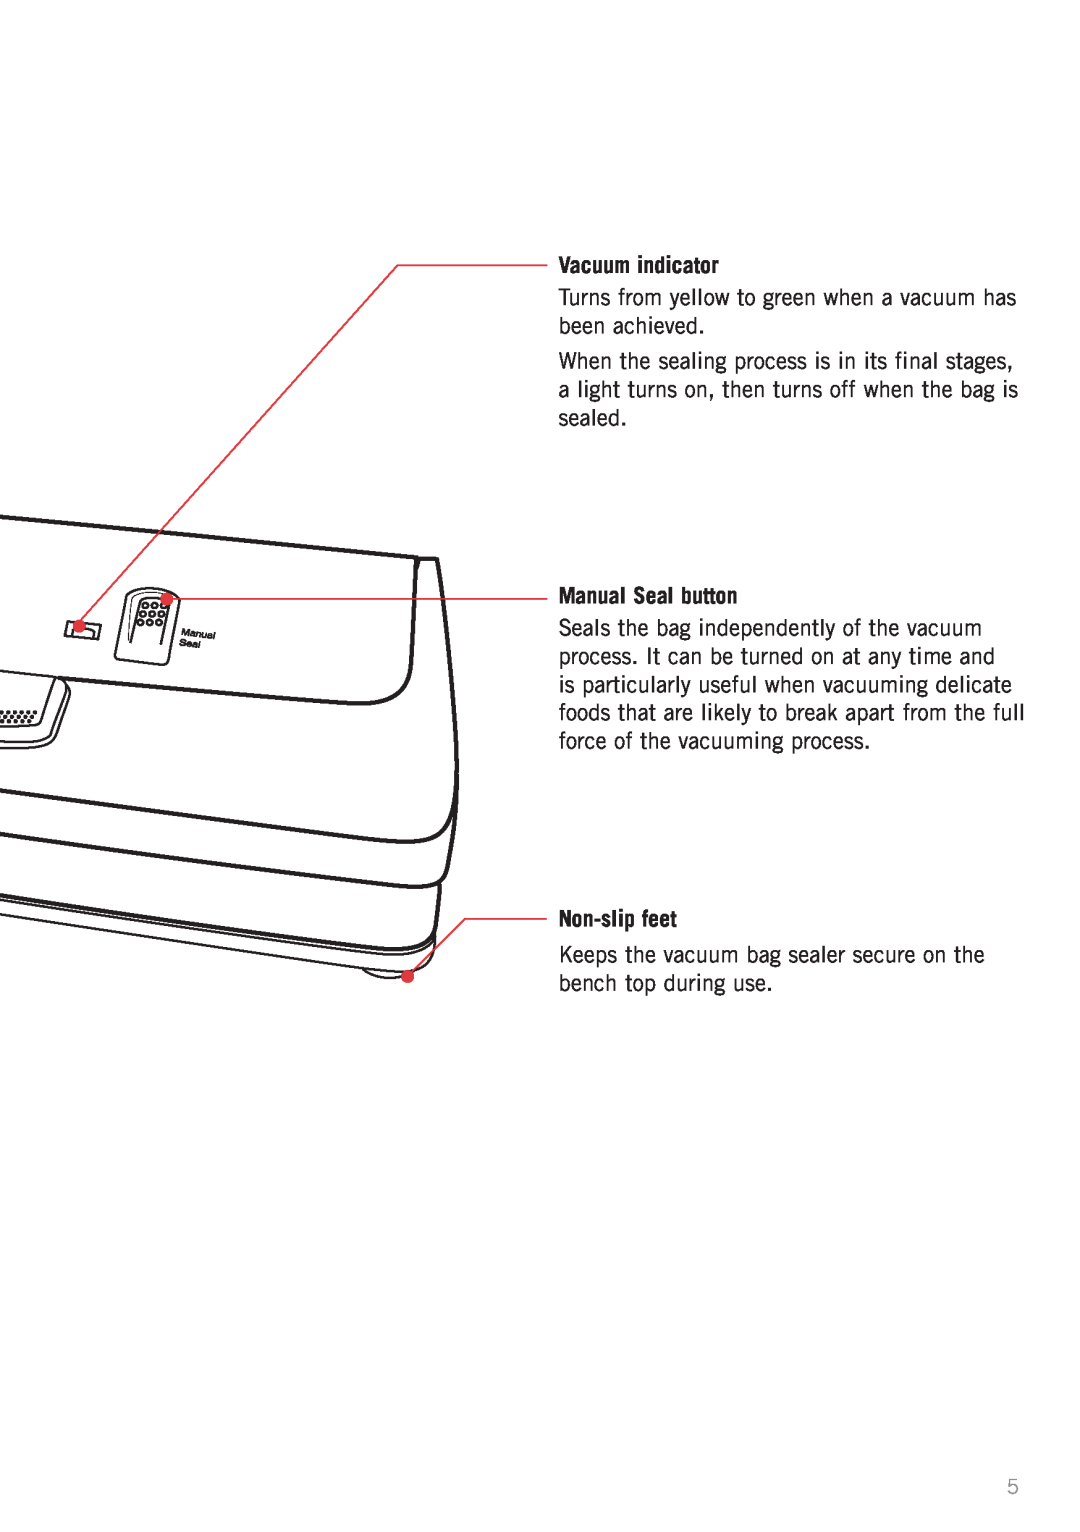 Sunbeam VS5200 manual Vacuum indicator, Manual Seal button, Non-slipfeet 